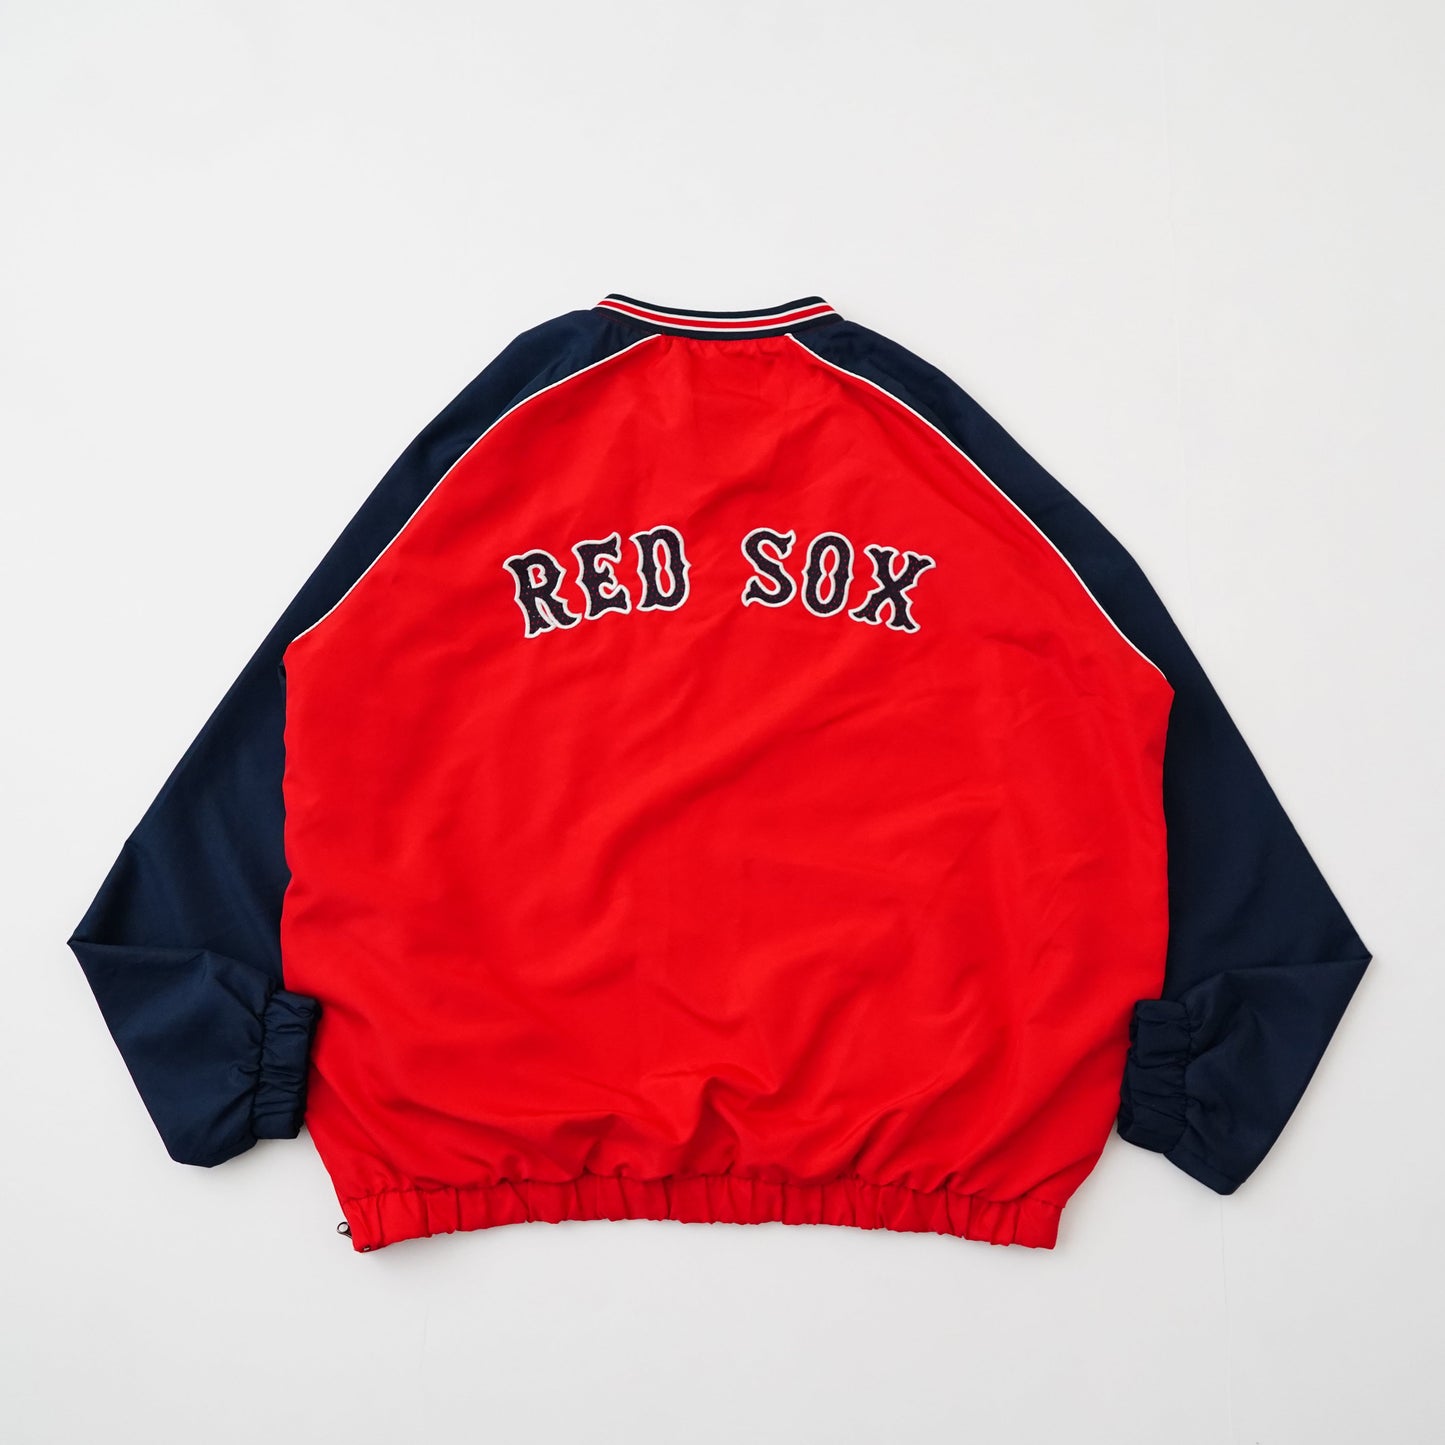 Red Sox sweat shirt